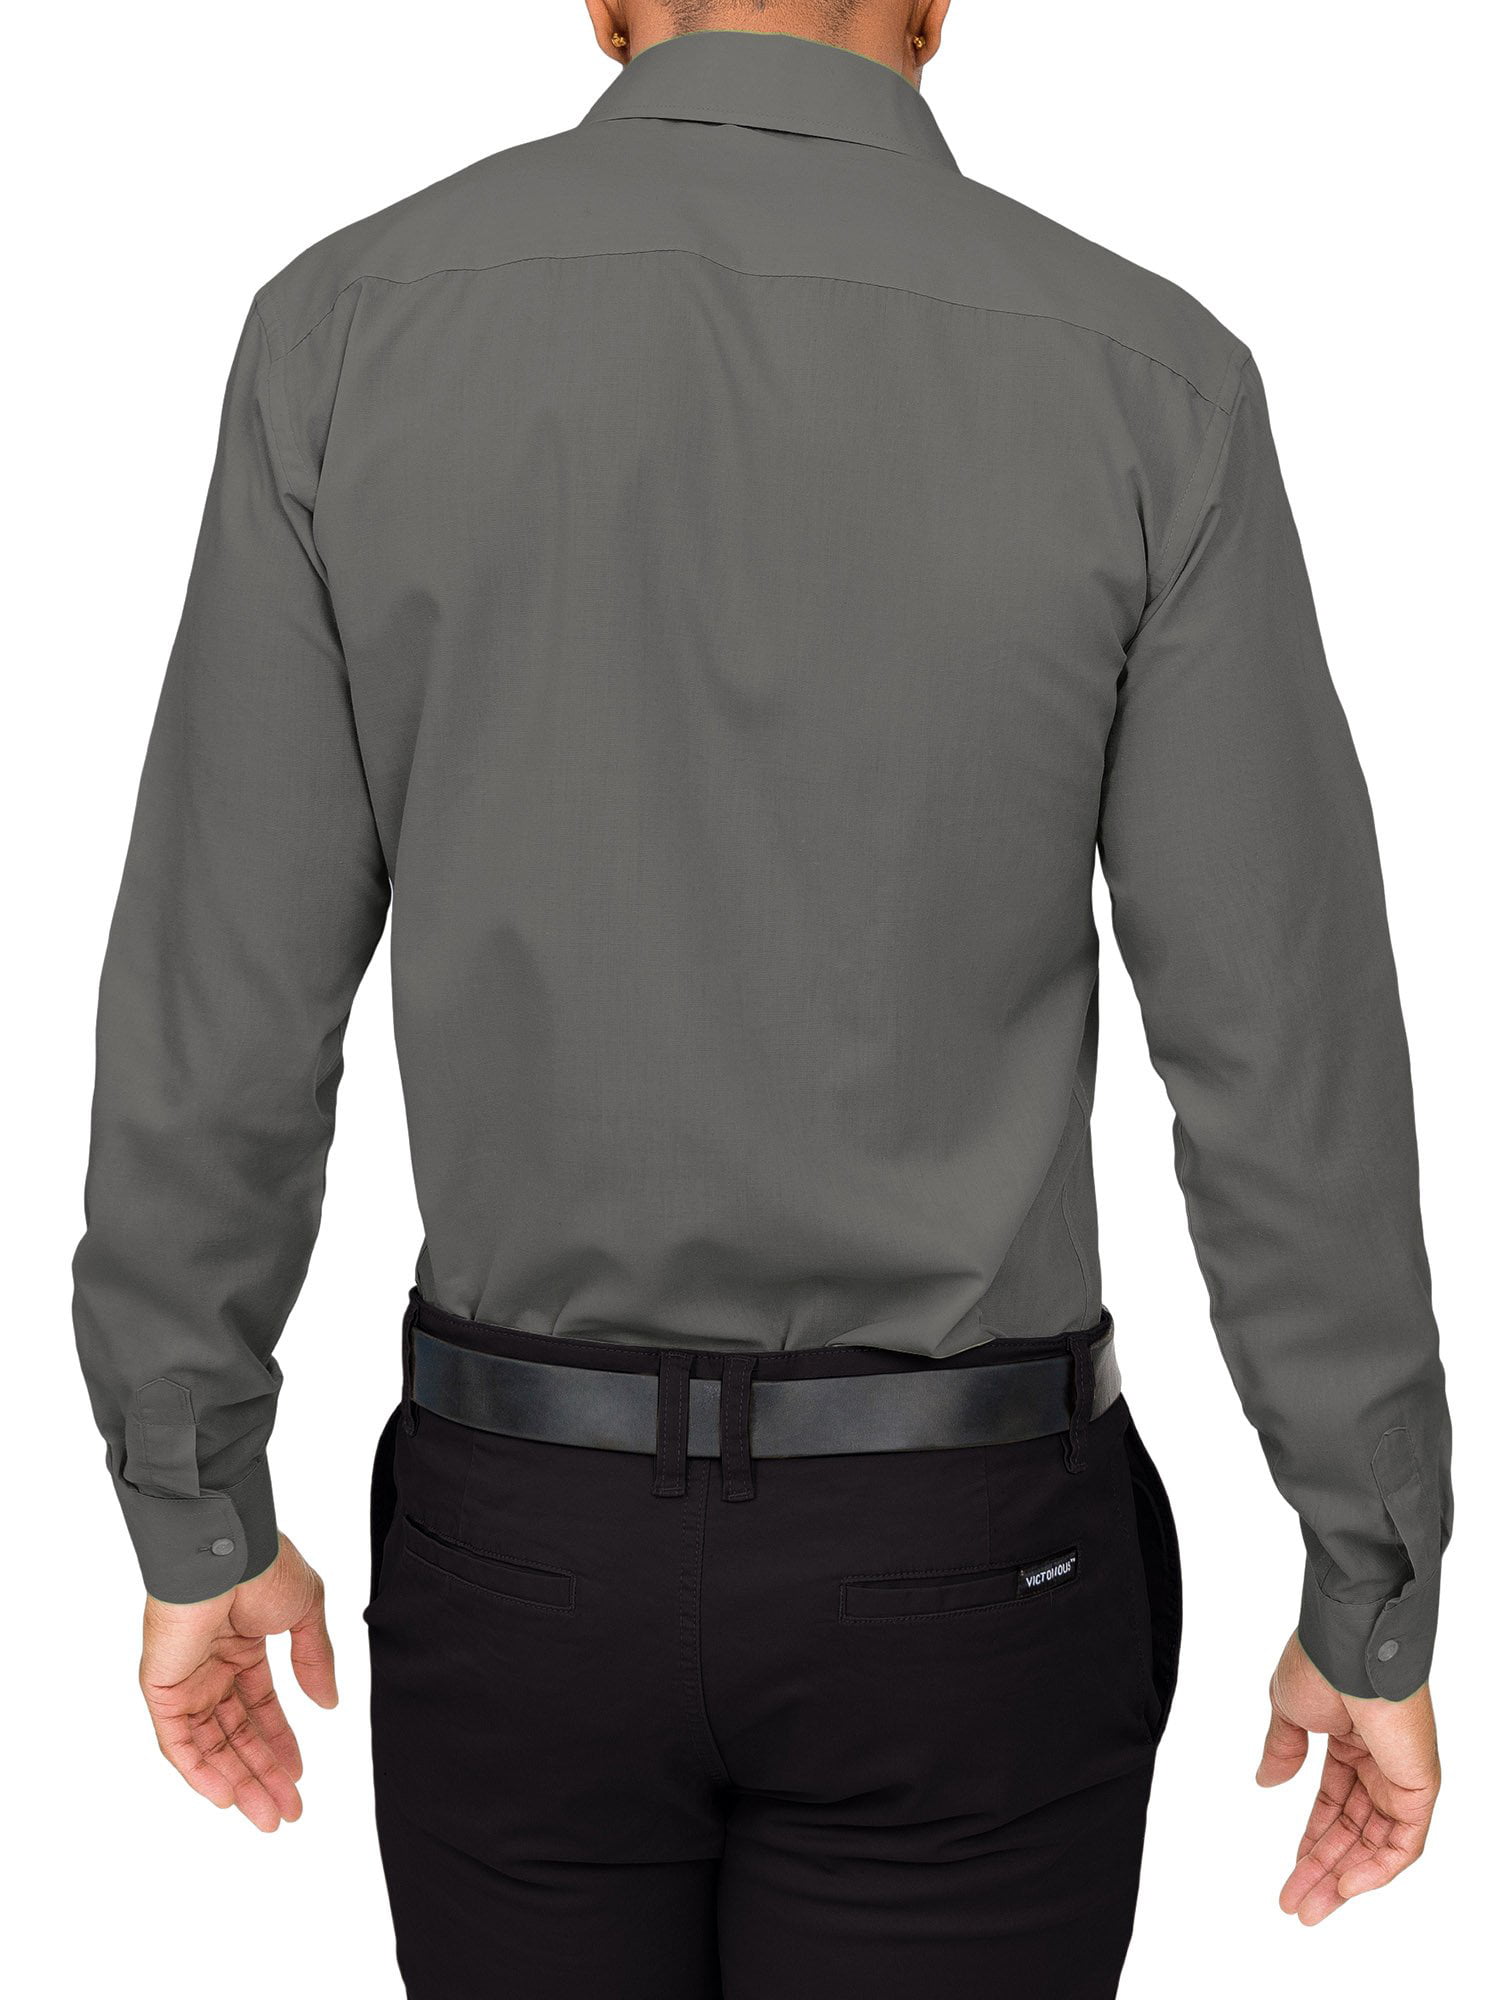 G-Style USA Men's Slim Fit Long Sleeve Dress Shirt - Charcoal -  XL/17-17.5/32-33